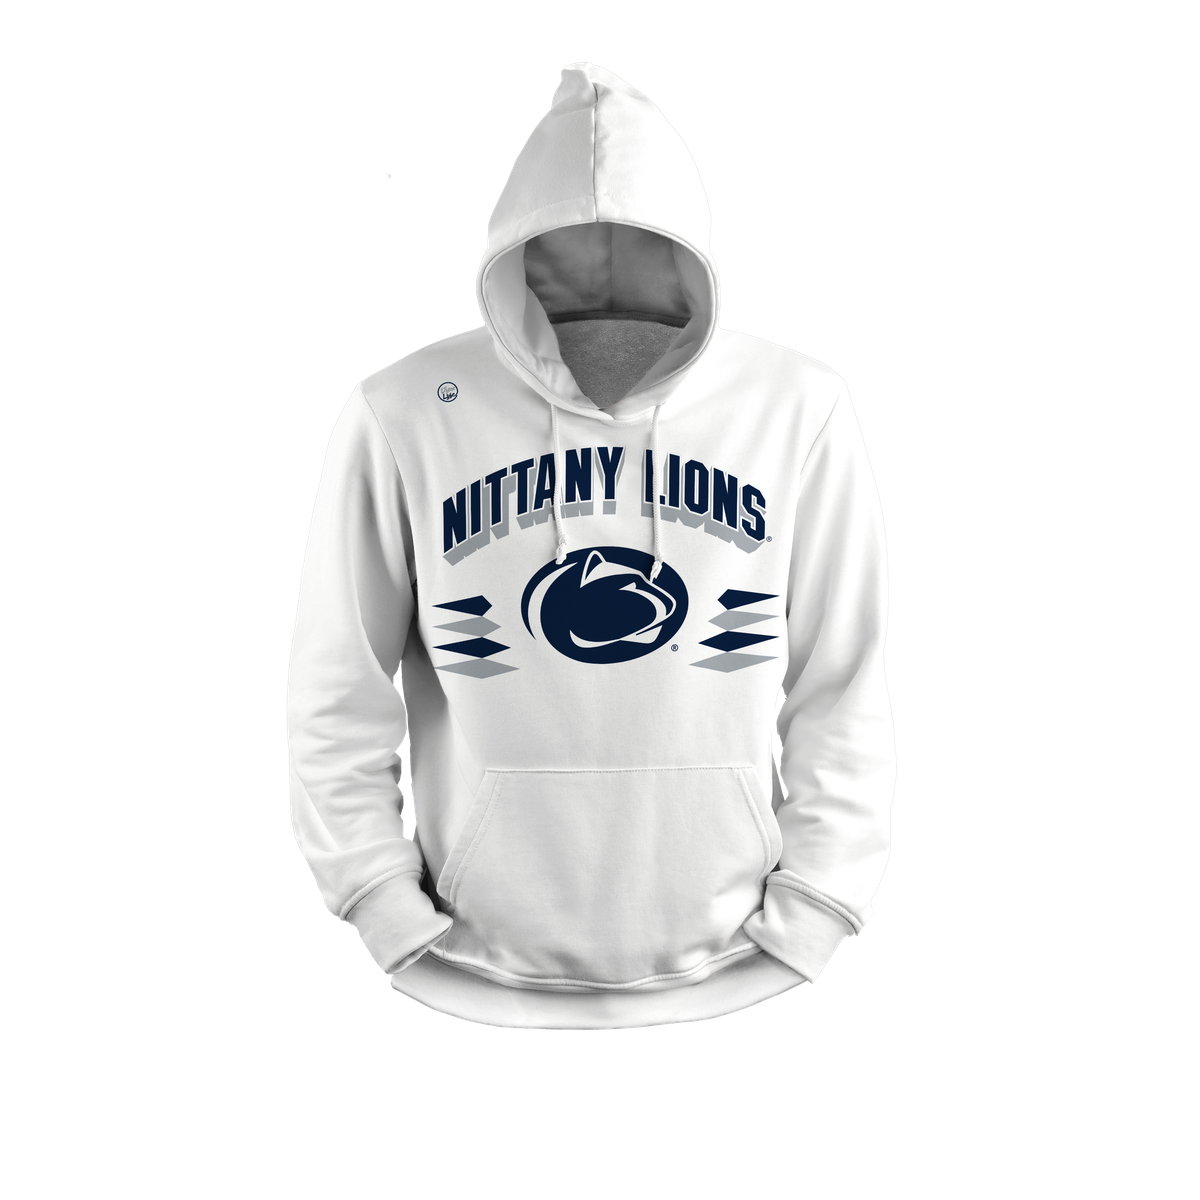 Penn State Nittany Lions Men’s Retro Hoodie